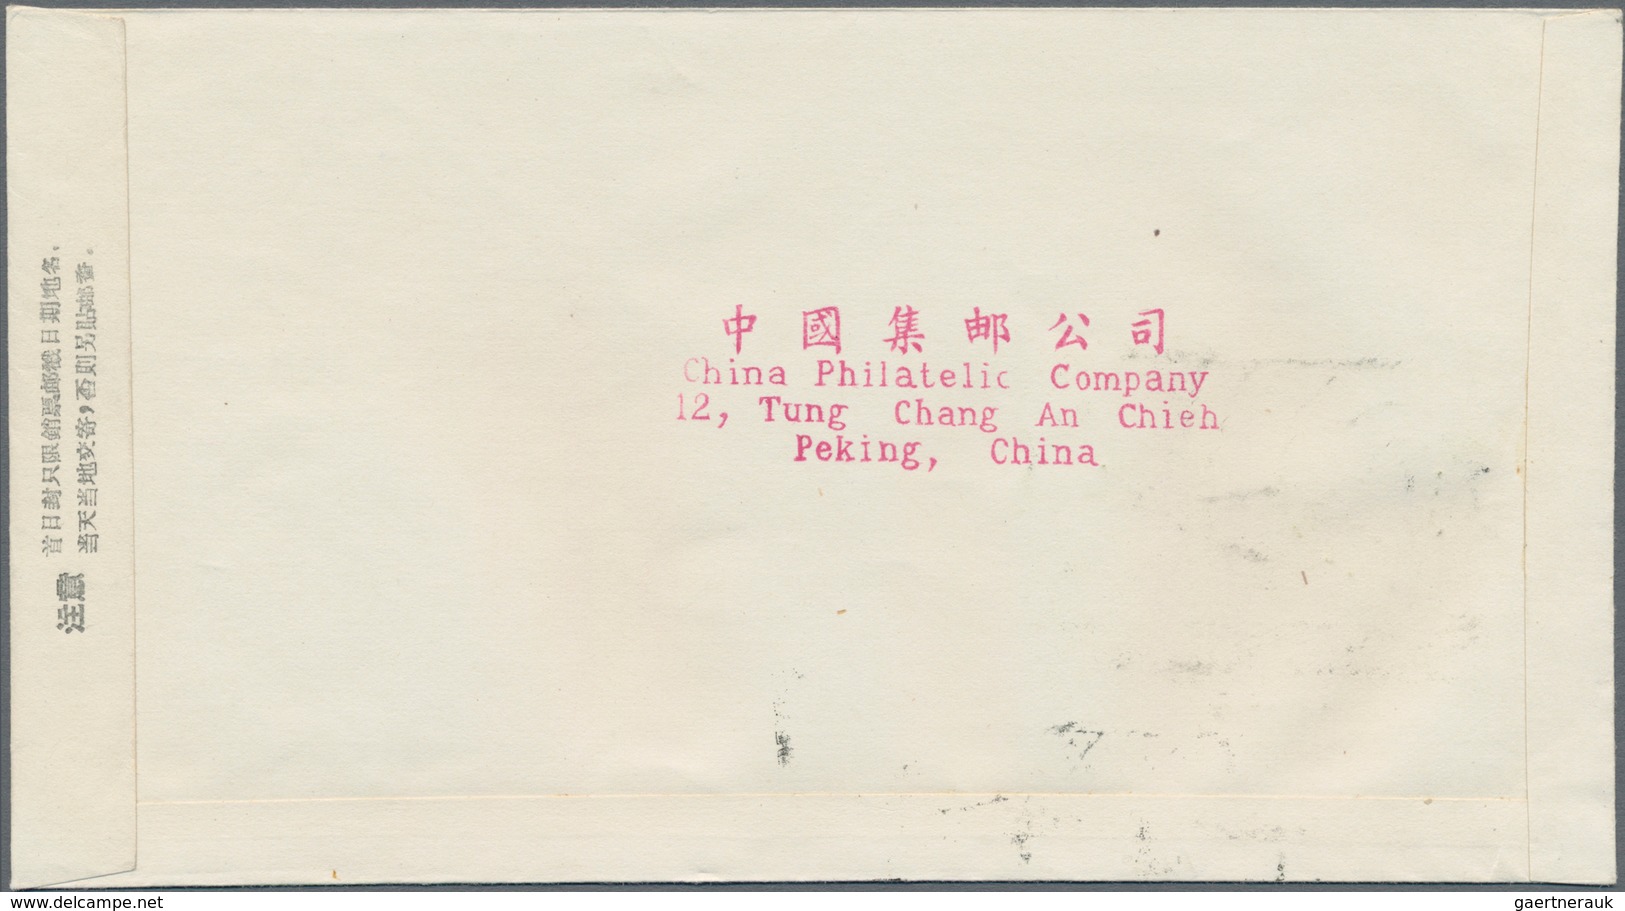 China - Volksrepublik: 1958, 6 FDCs bearing Michel 379/87 and 390/97 (S18, C50, S23, C52, C53, S24),